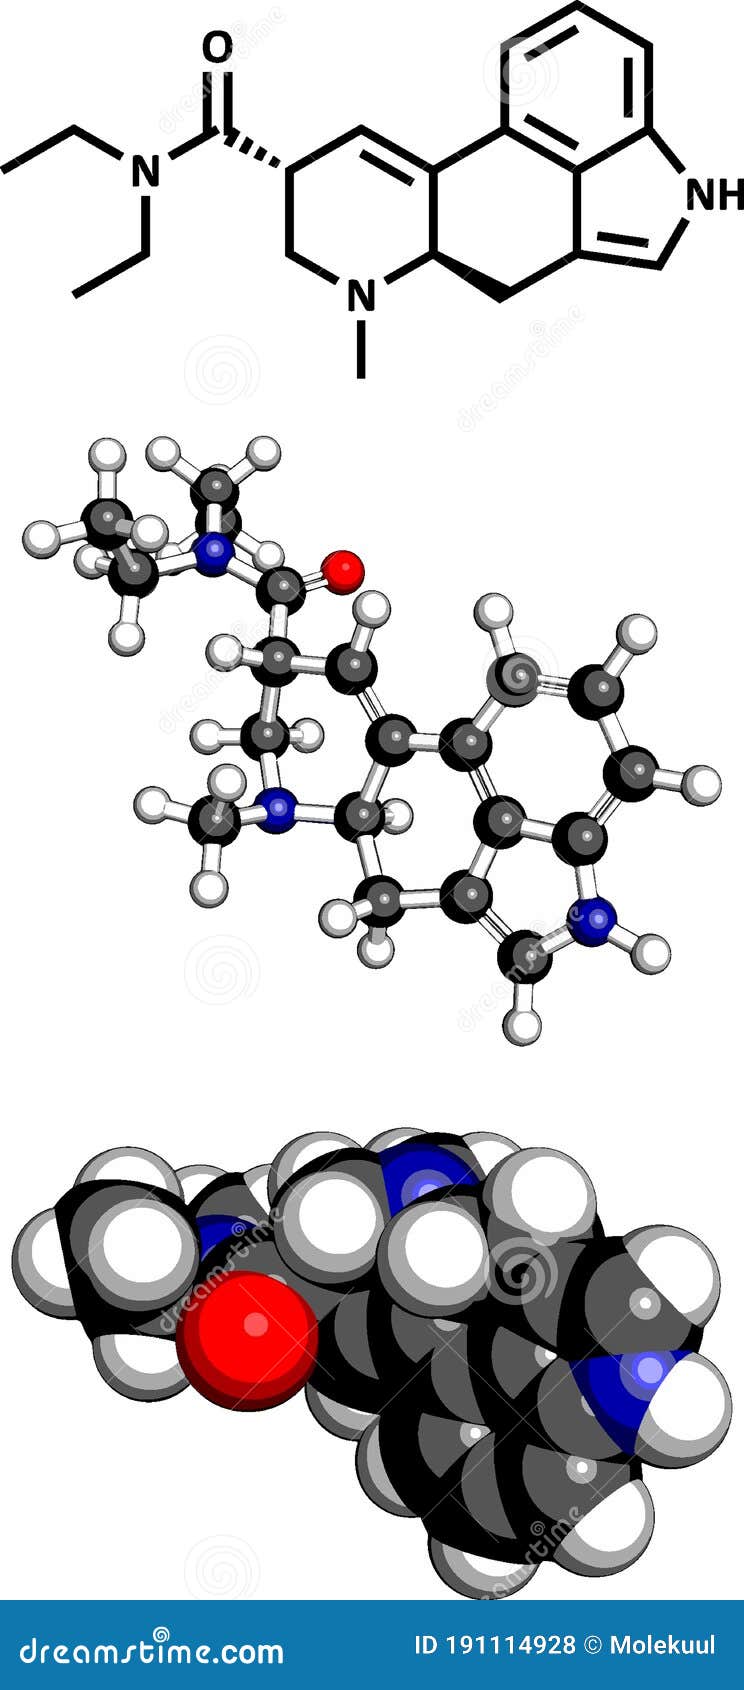 lysergic acid diethylamide (lsd) hallucinogenic drug, molecular model